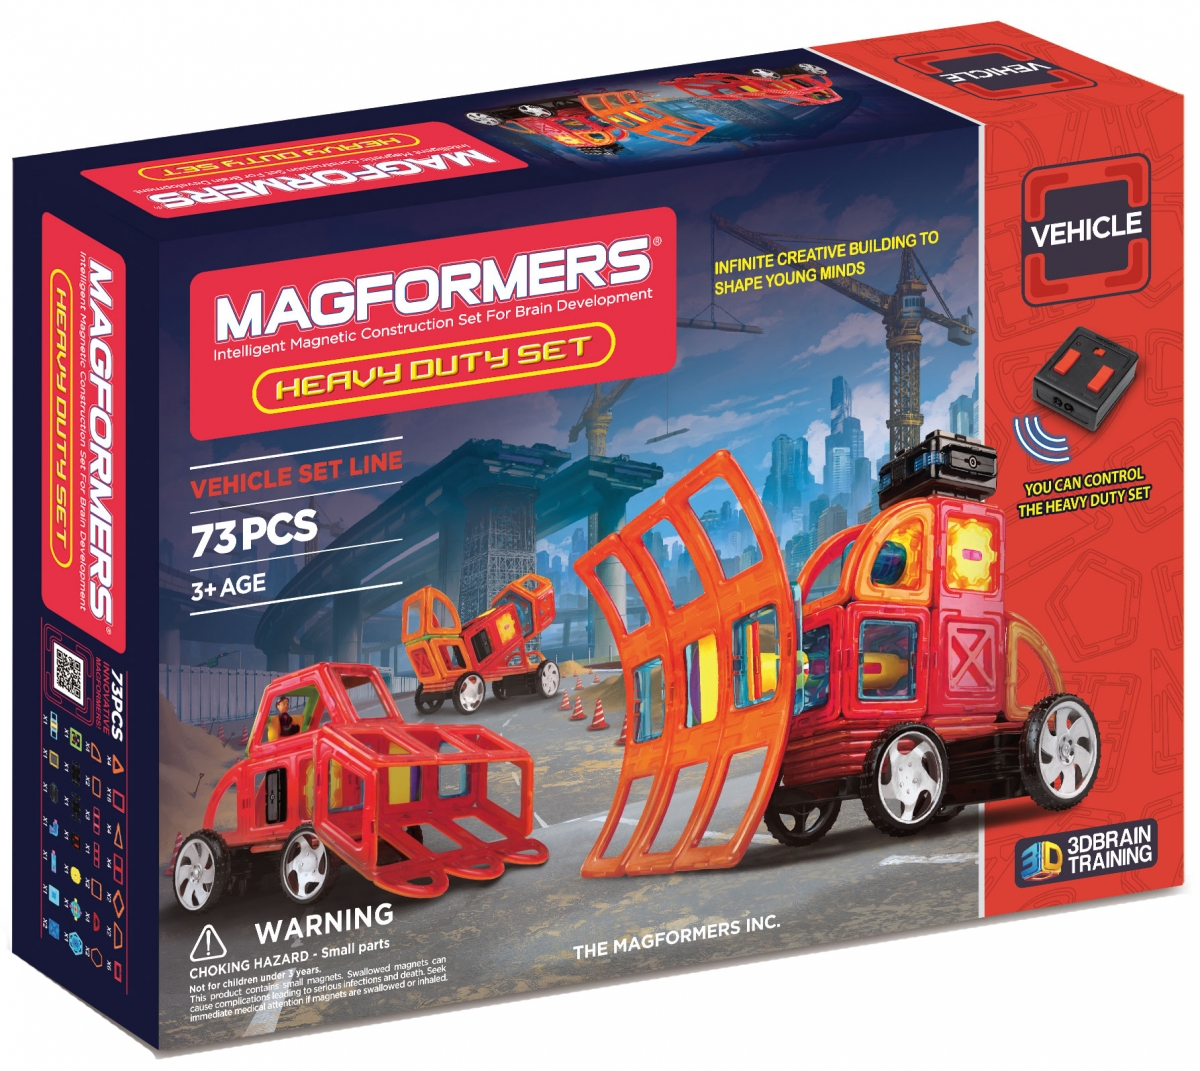   Magformers Heavy Duty Set    (73 )